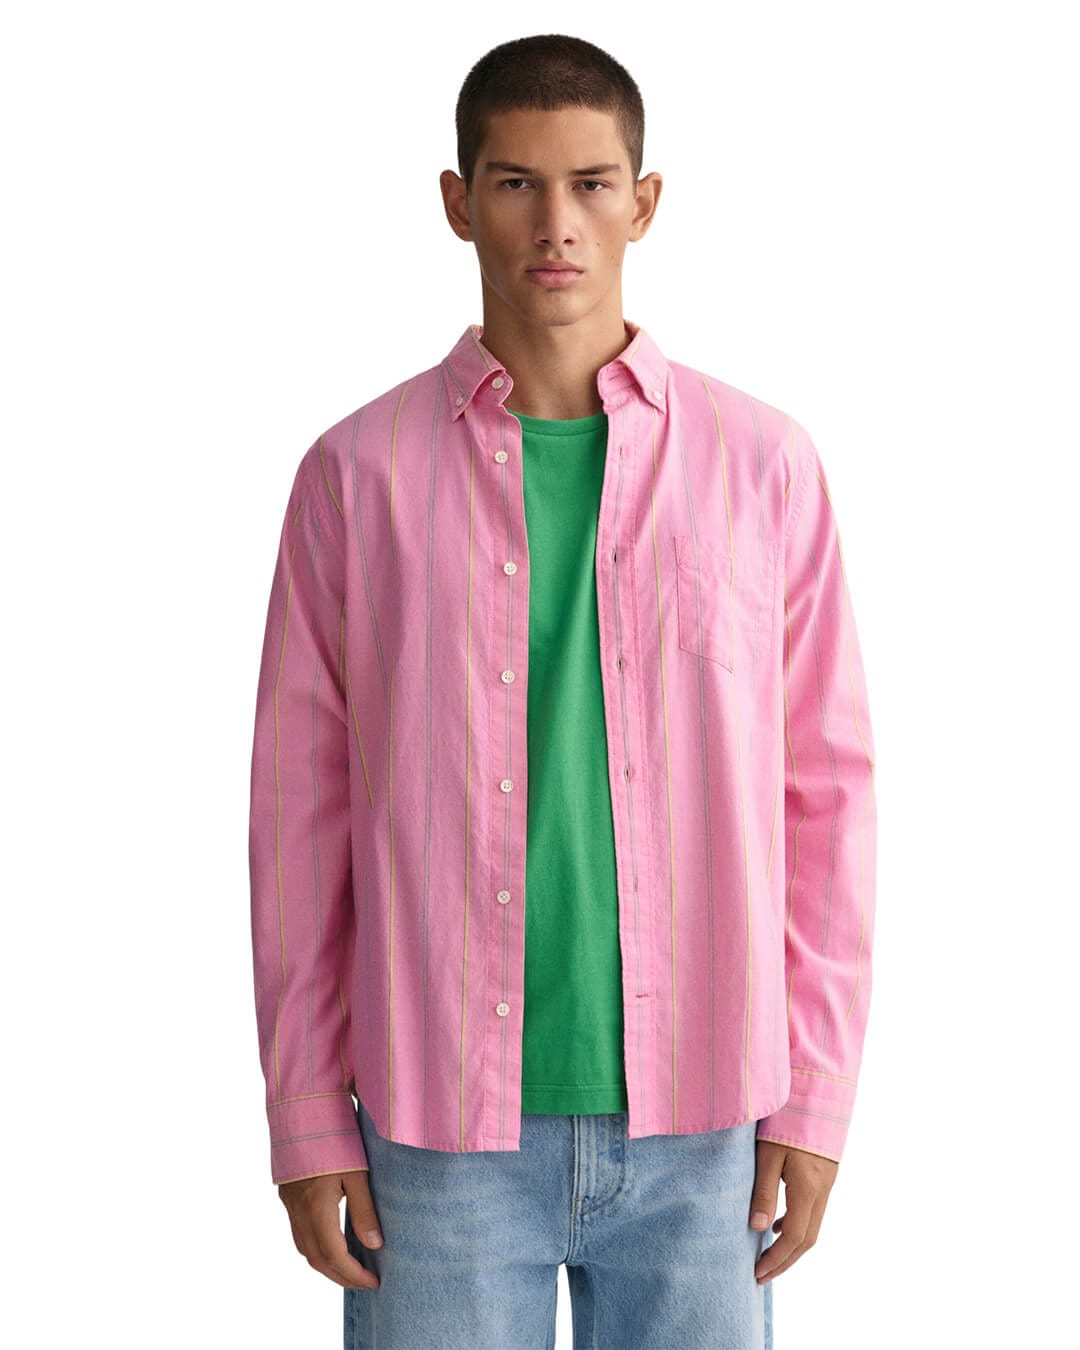 Gant Shirts Gant Pink Regular Fit Striped Archive Oxford Shirt